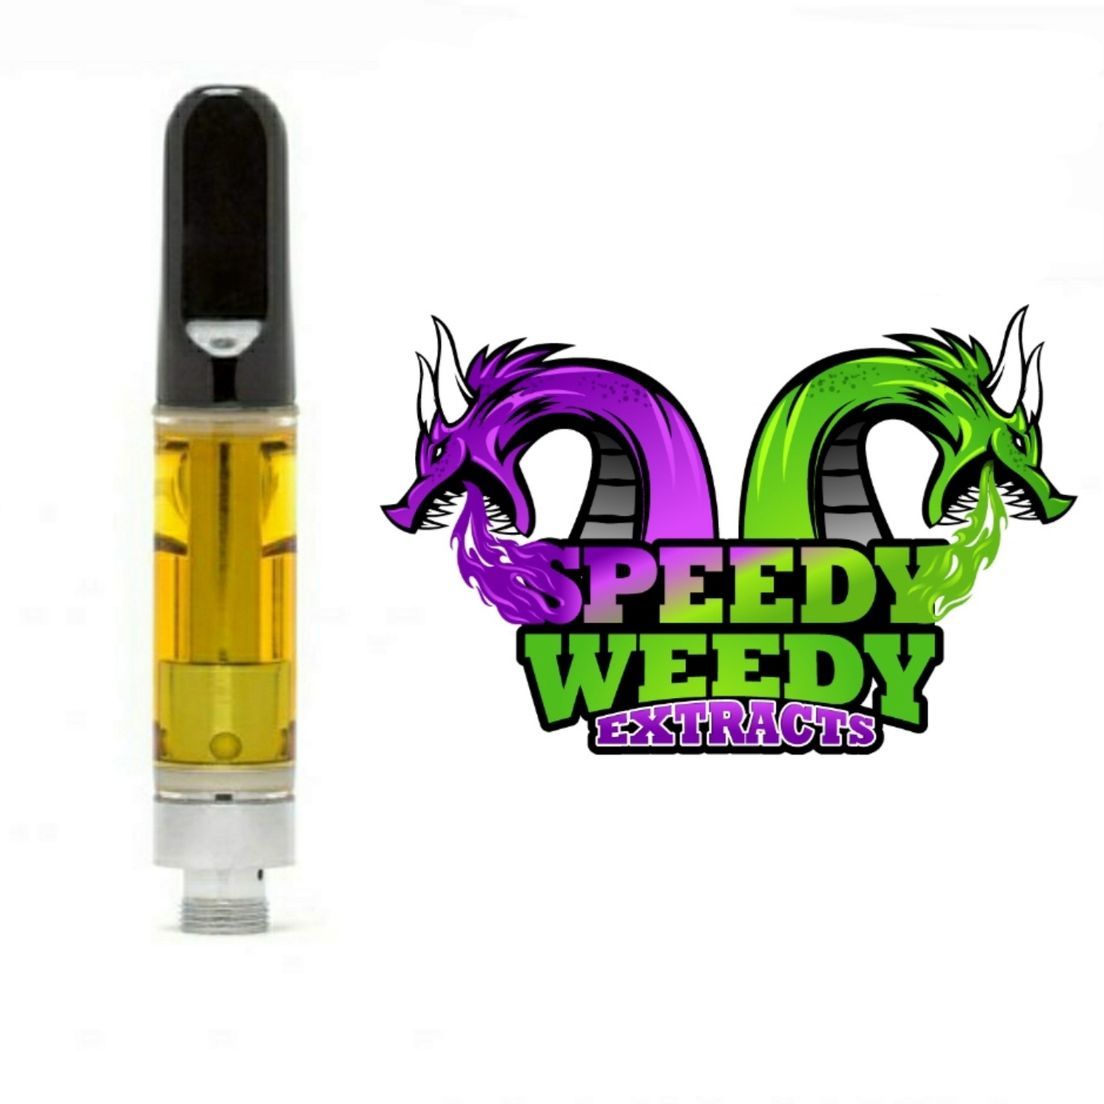 1. Speedy Weedy 1g Cartridge - Ghost OG